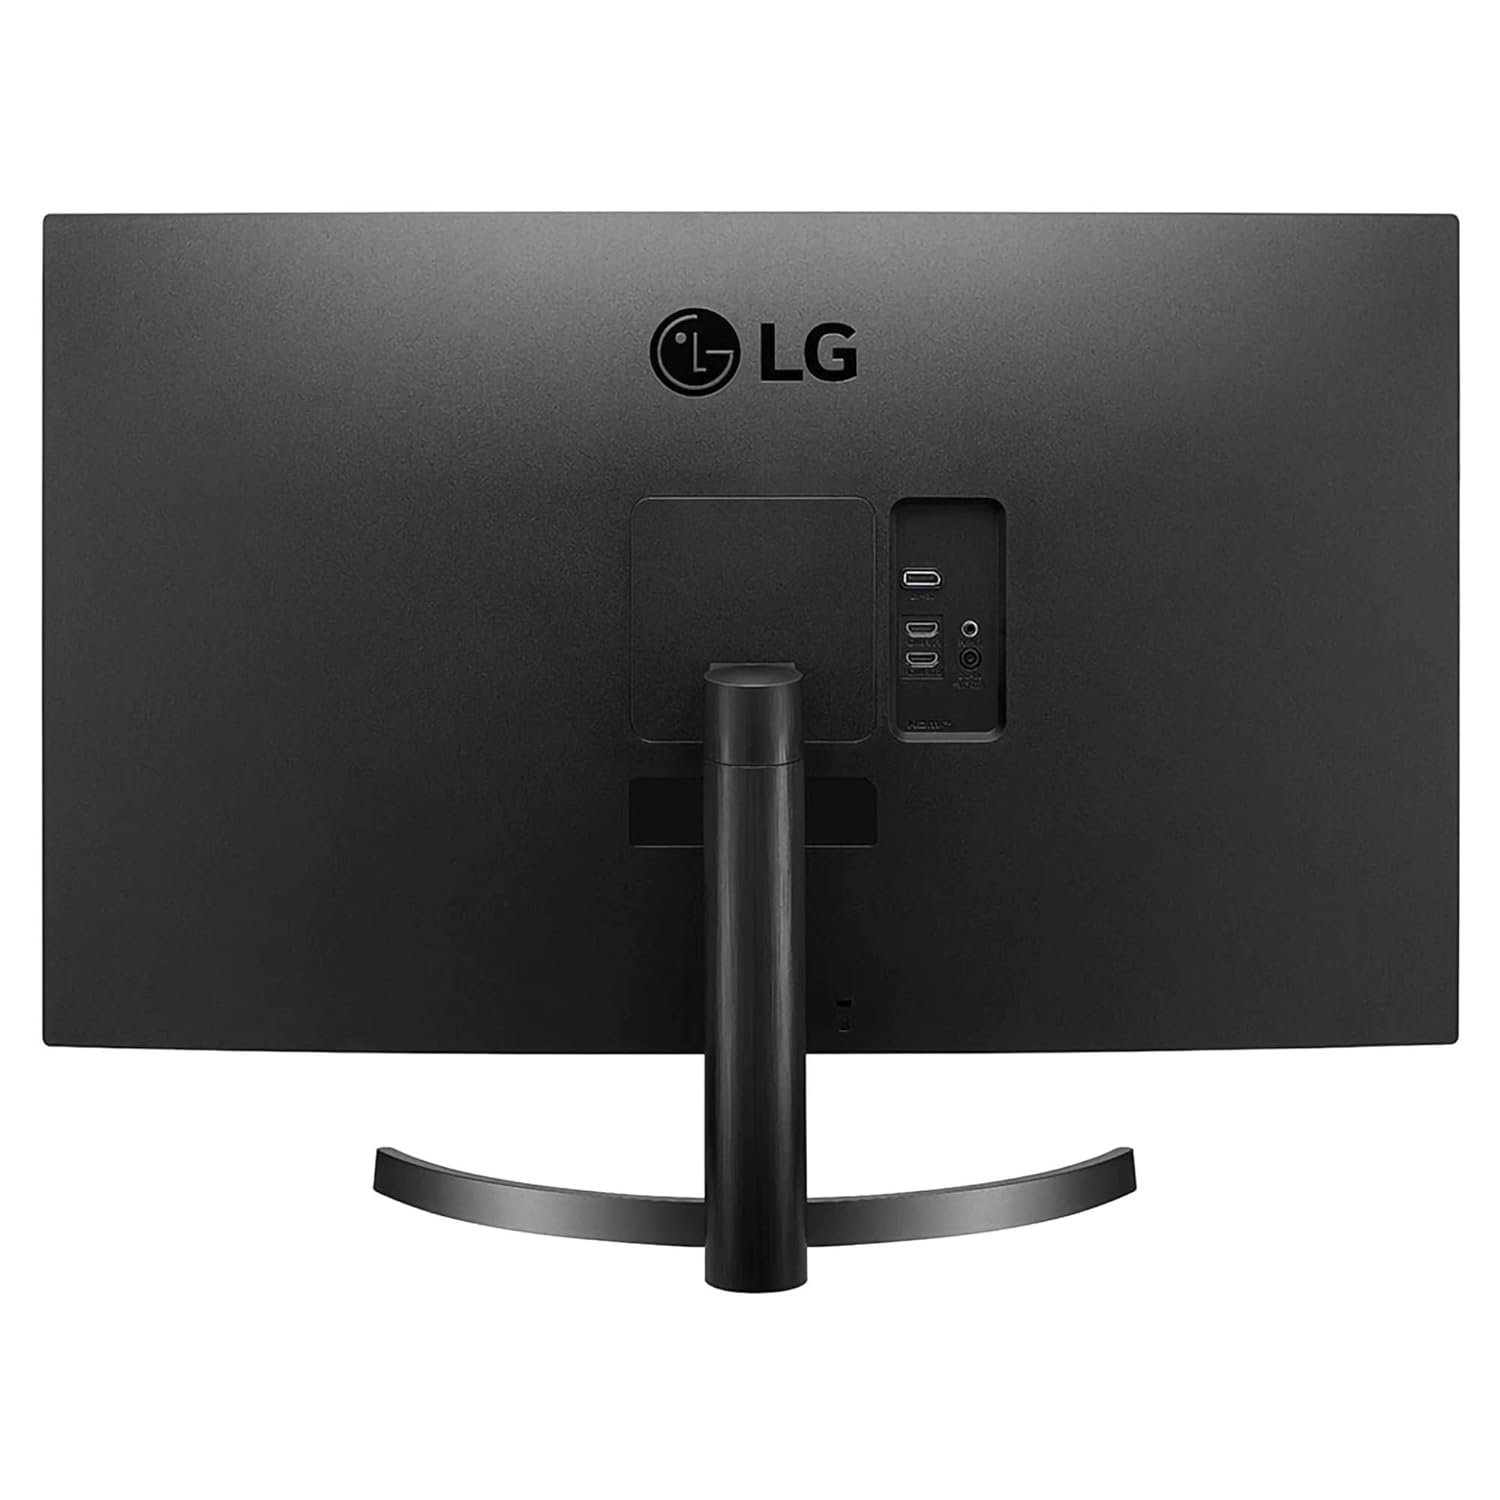 LG 32QN650 31.5-inch IPS Monitor 2560x1440p 99% sRGB Edge LED Display